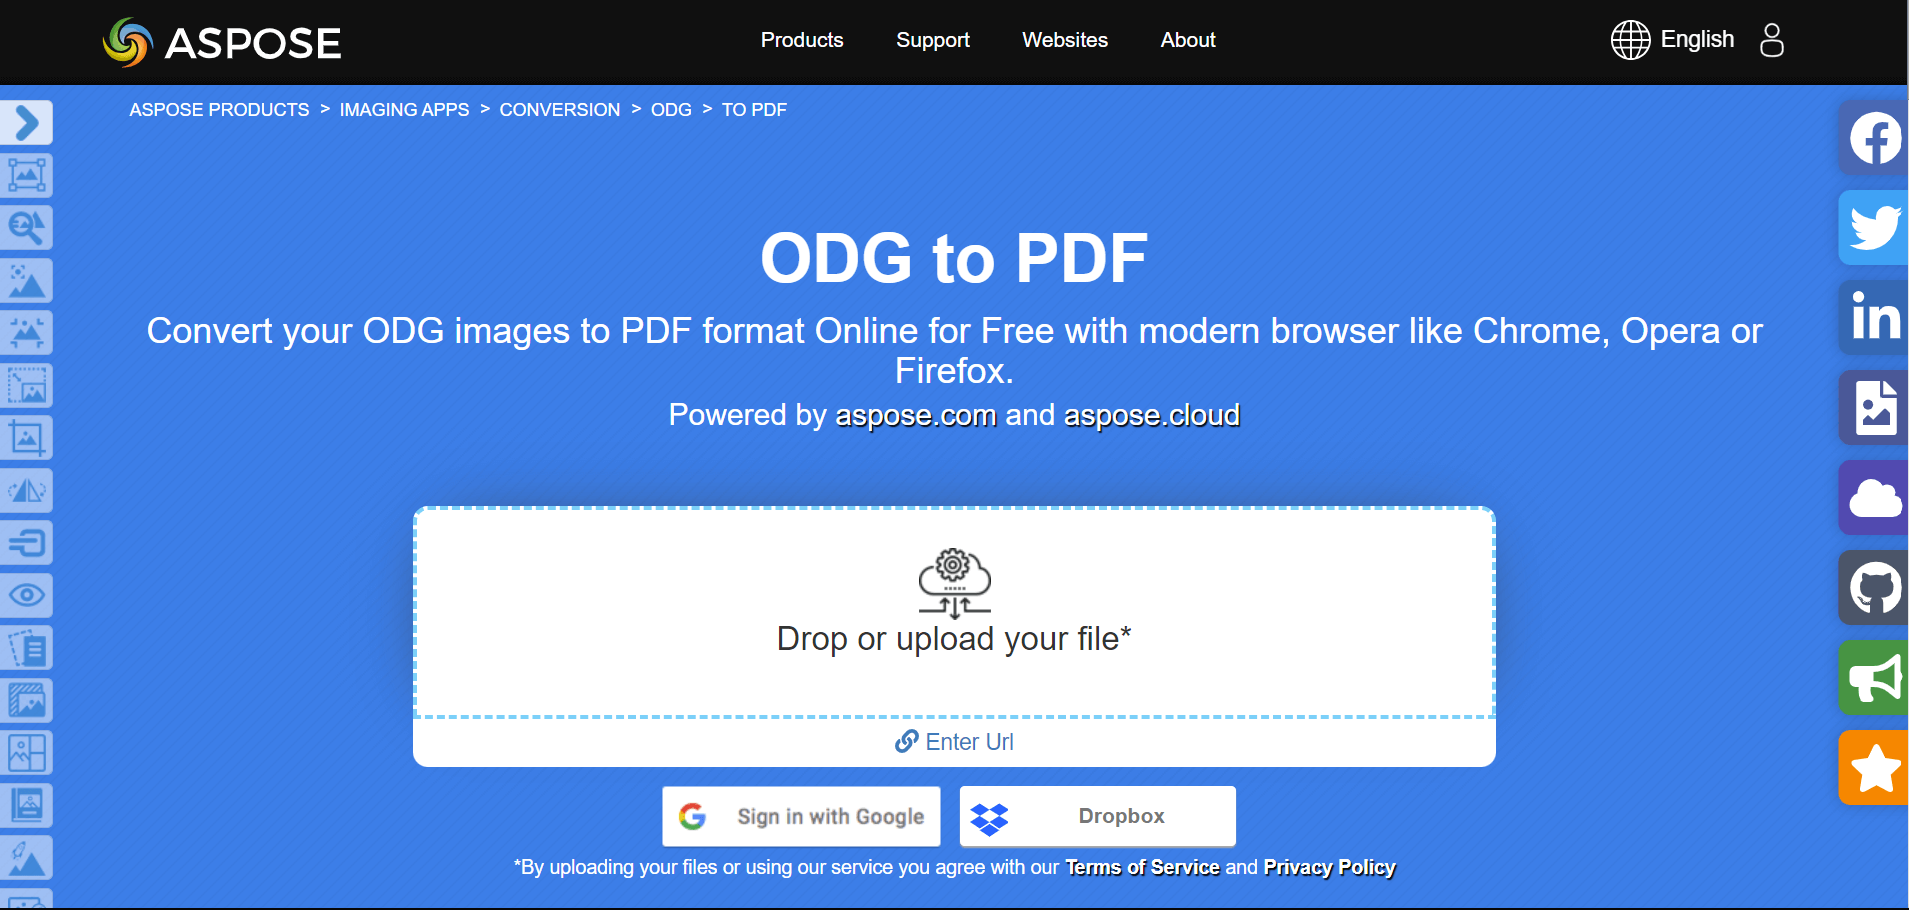 da ODG a PDF asponi online